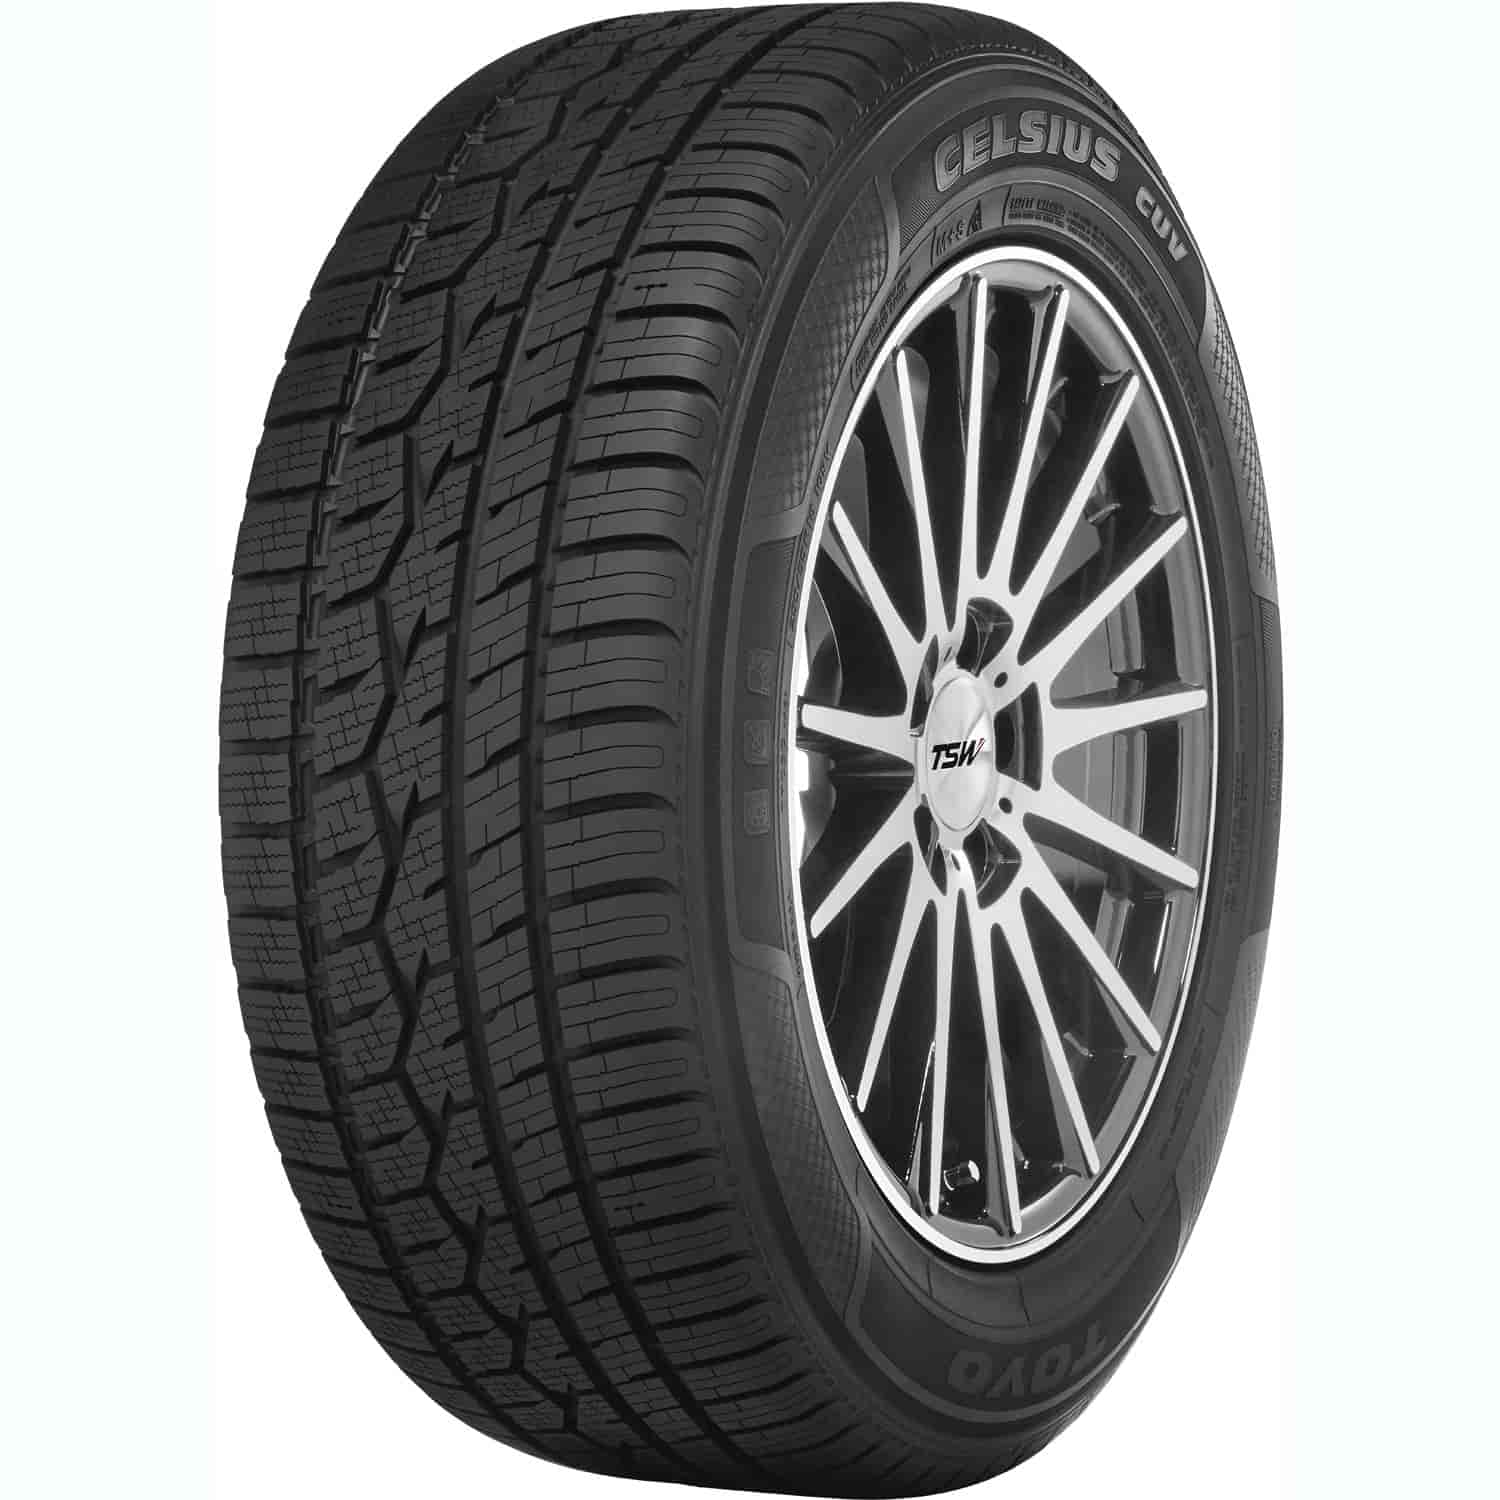 Celsius CUV Tire 215/70R16